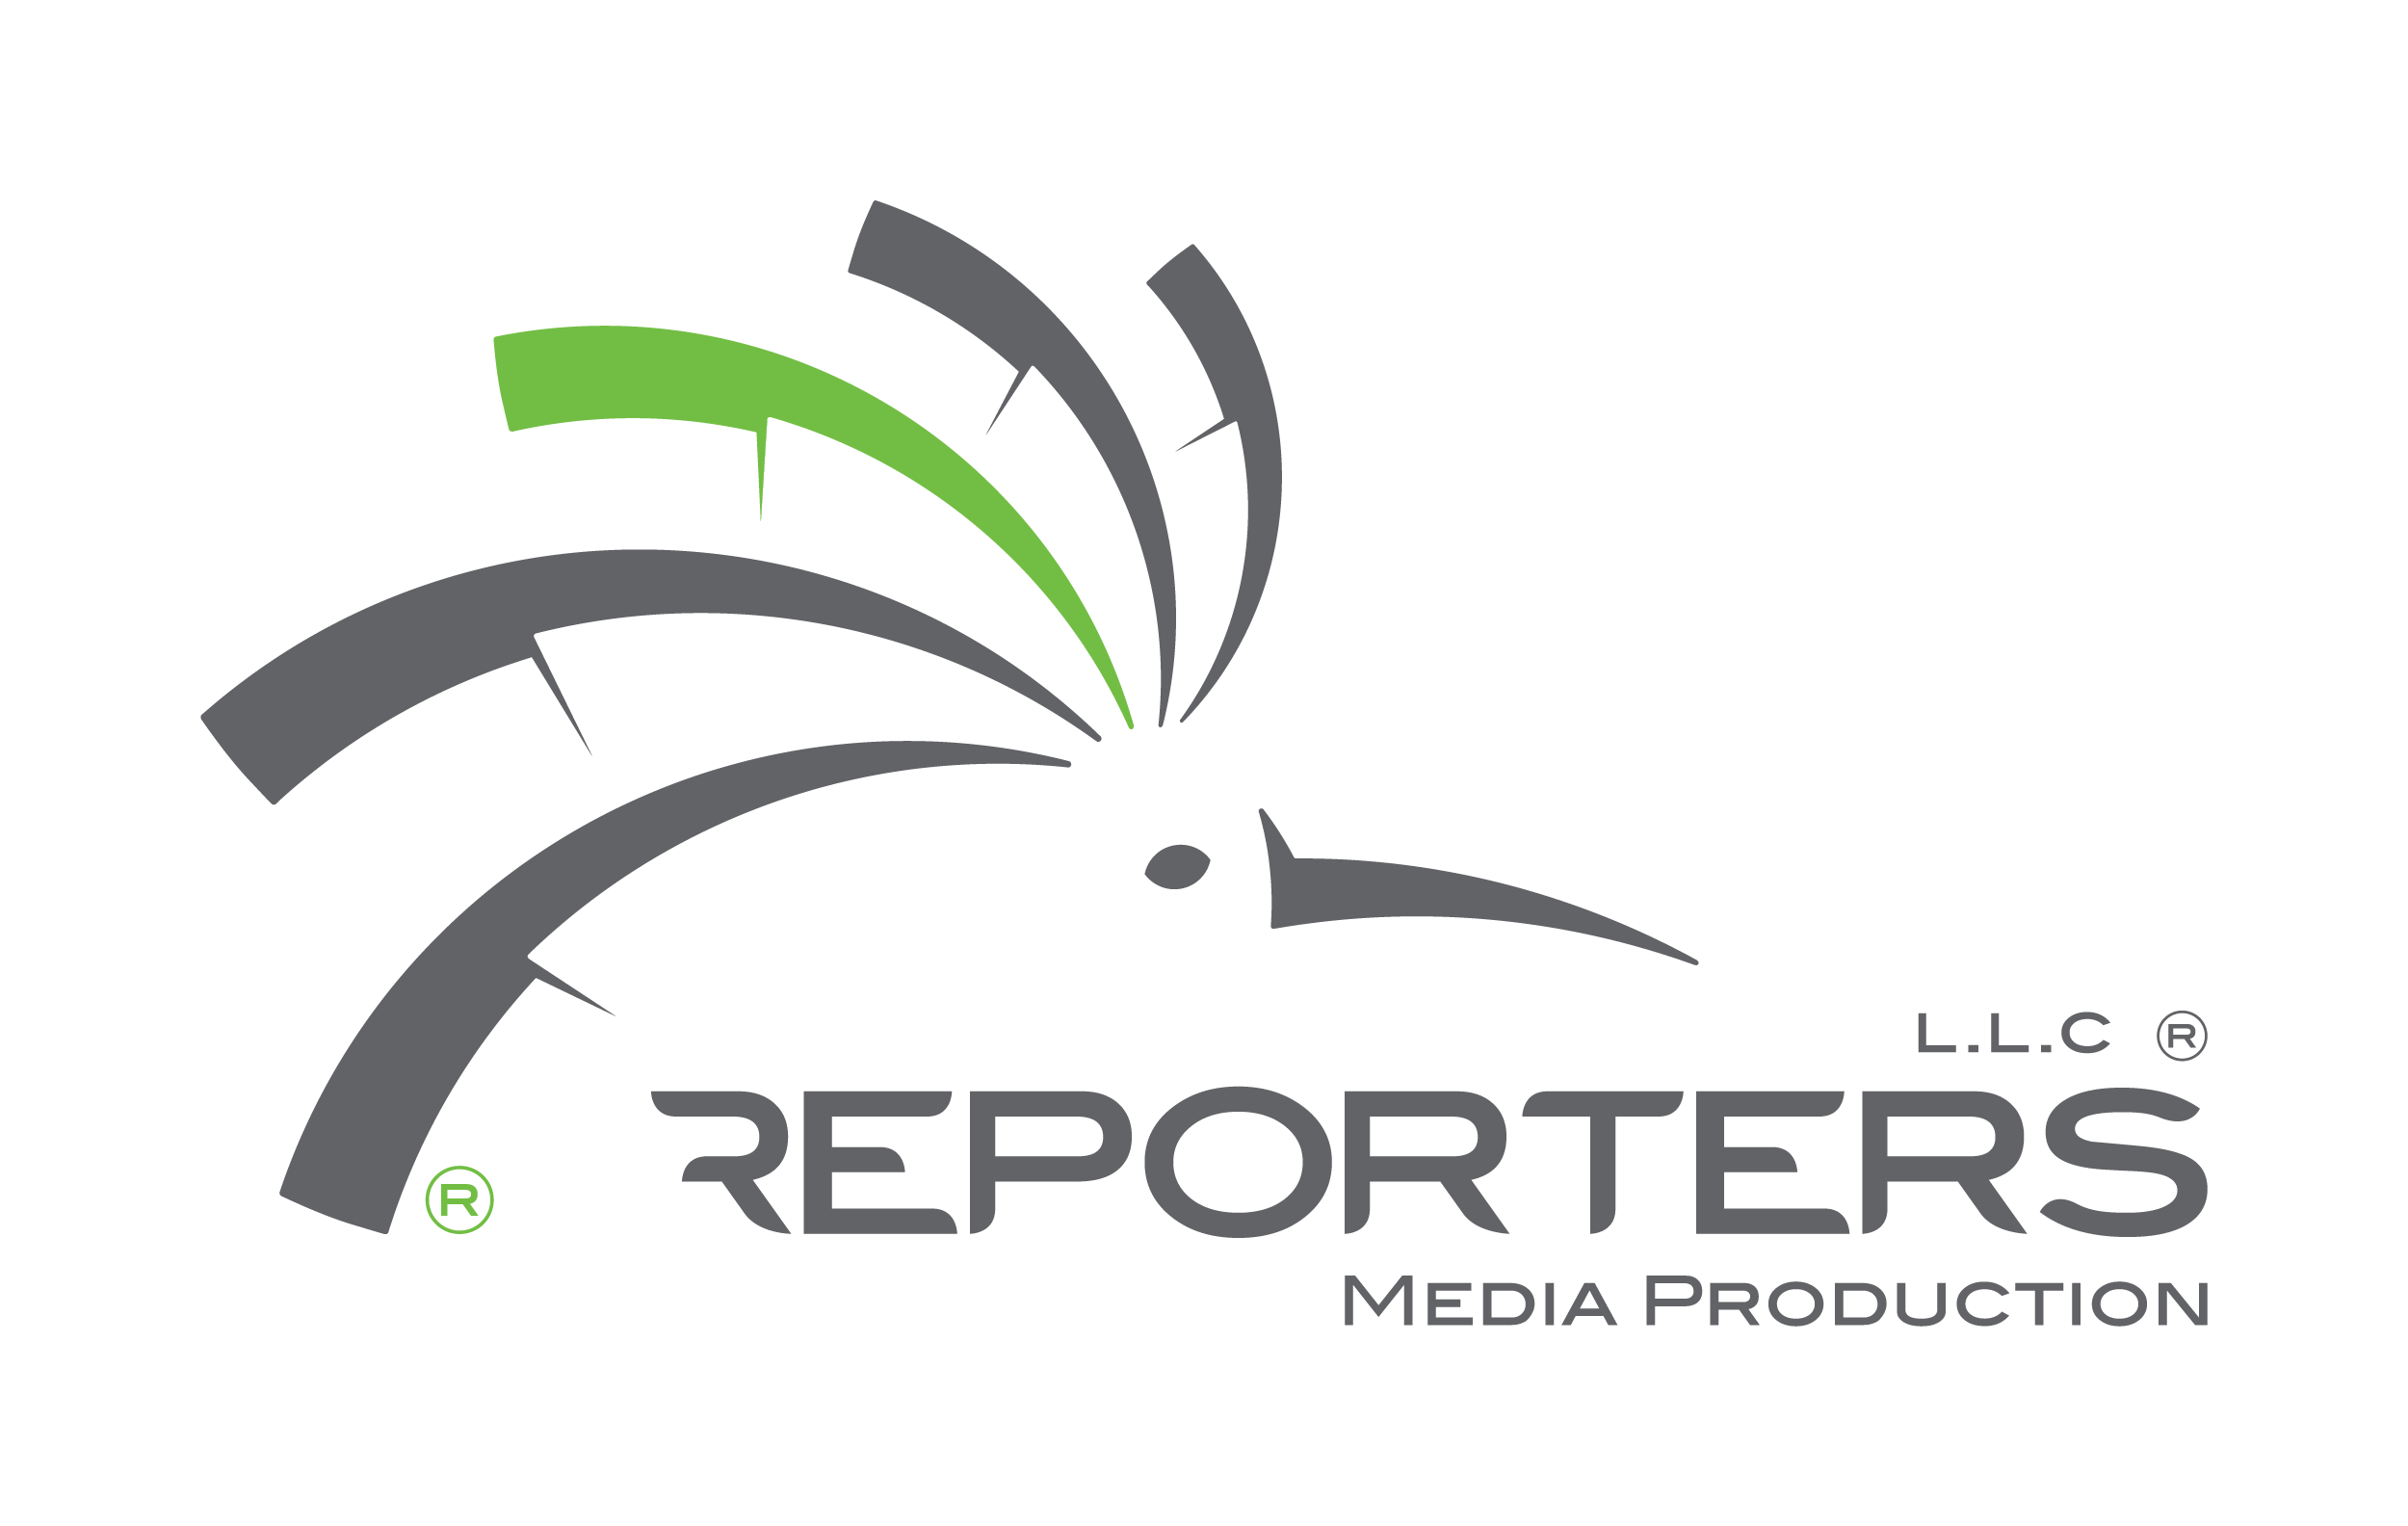 Media Production